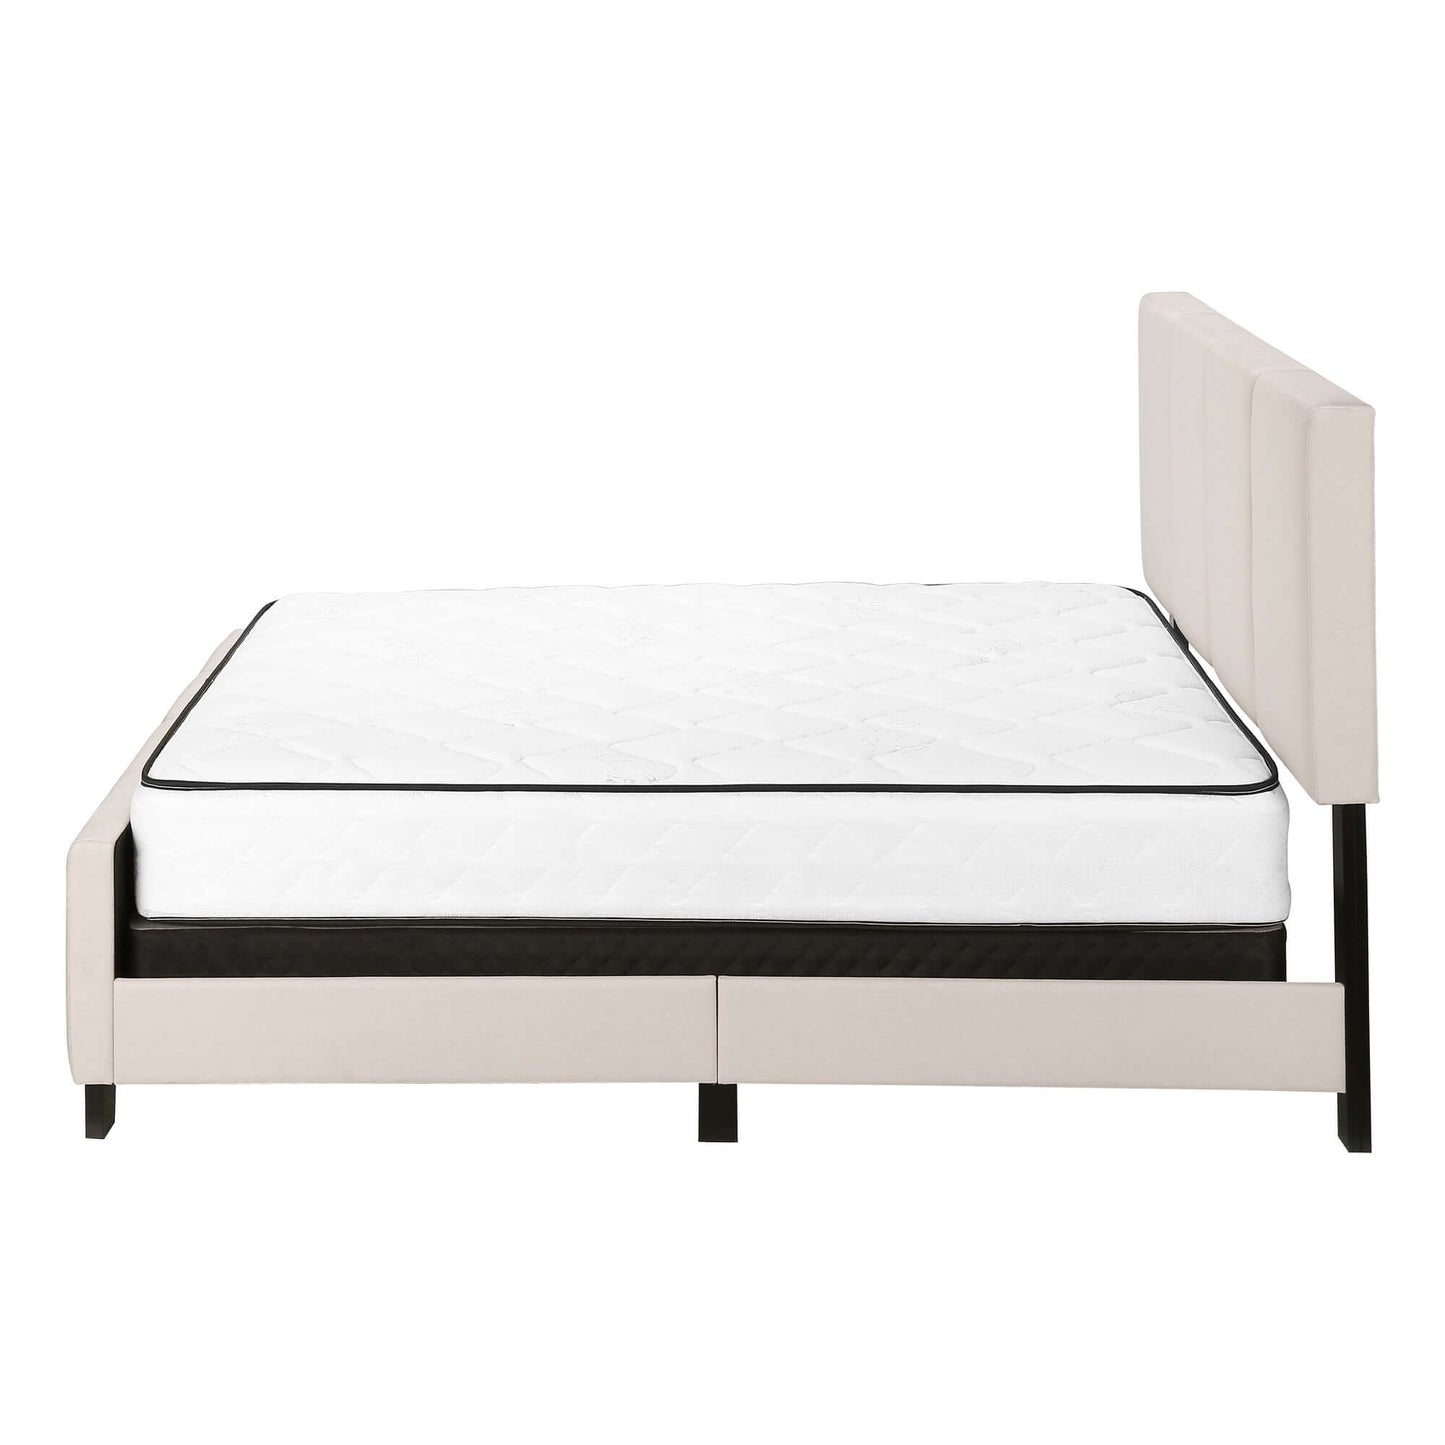 Queen Size Modern Platform Bed Upholstered in Beige Linen Fabric